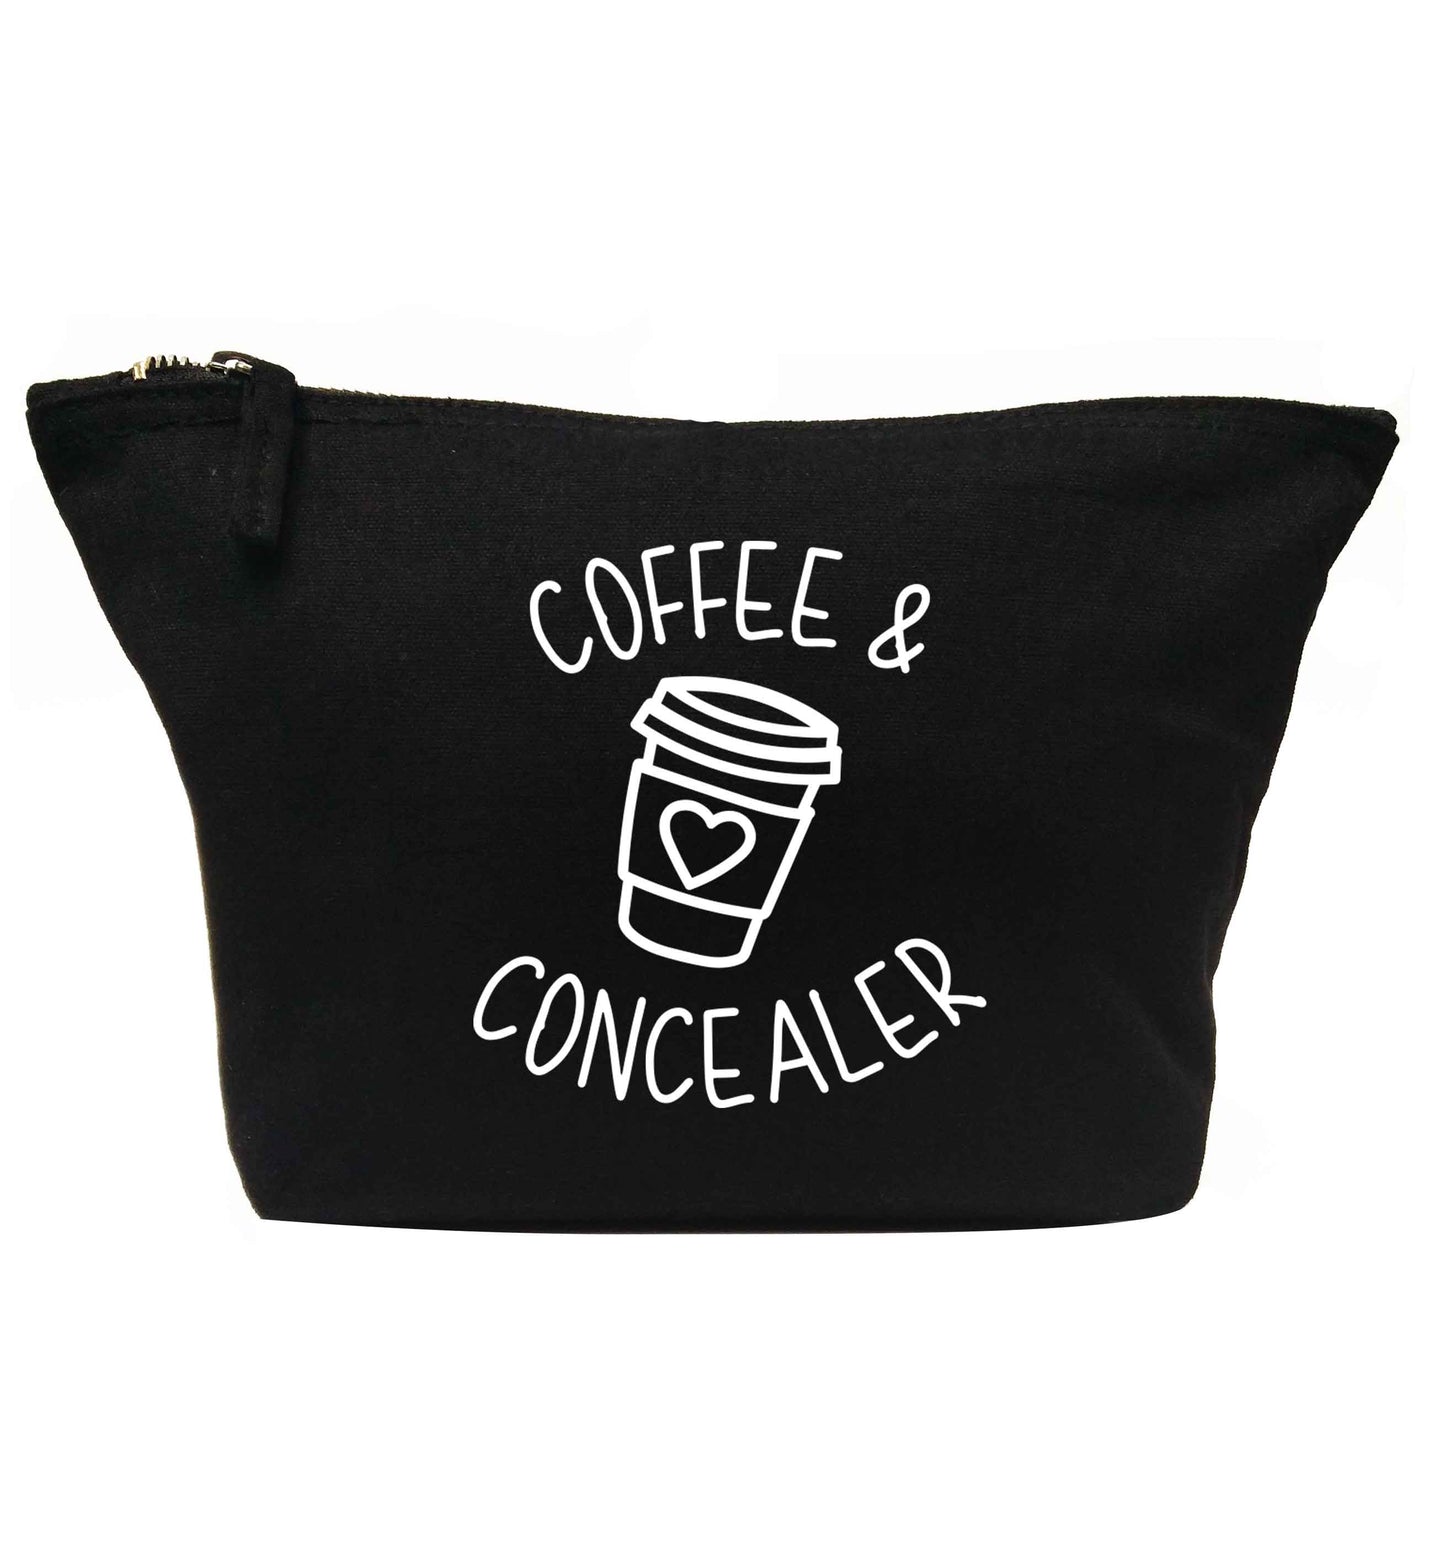 Coffee and concealer | Makeup / wash bag